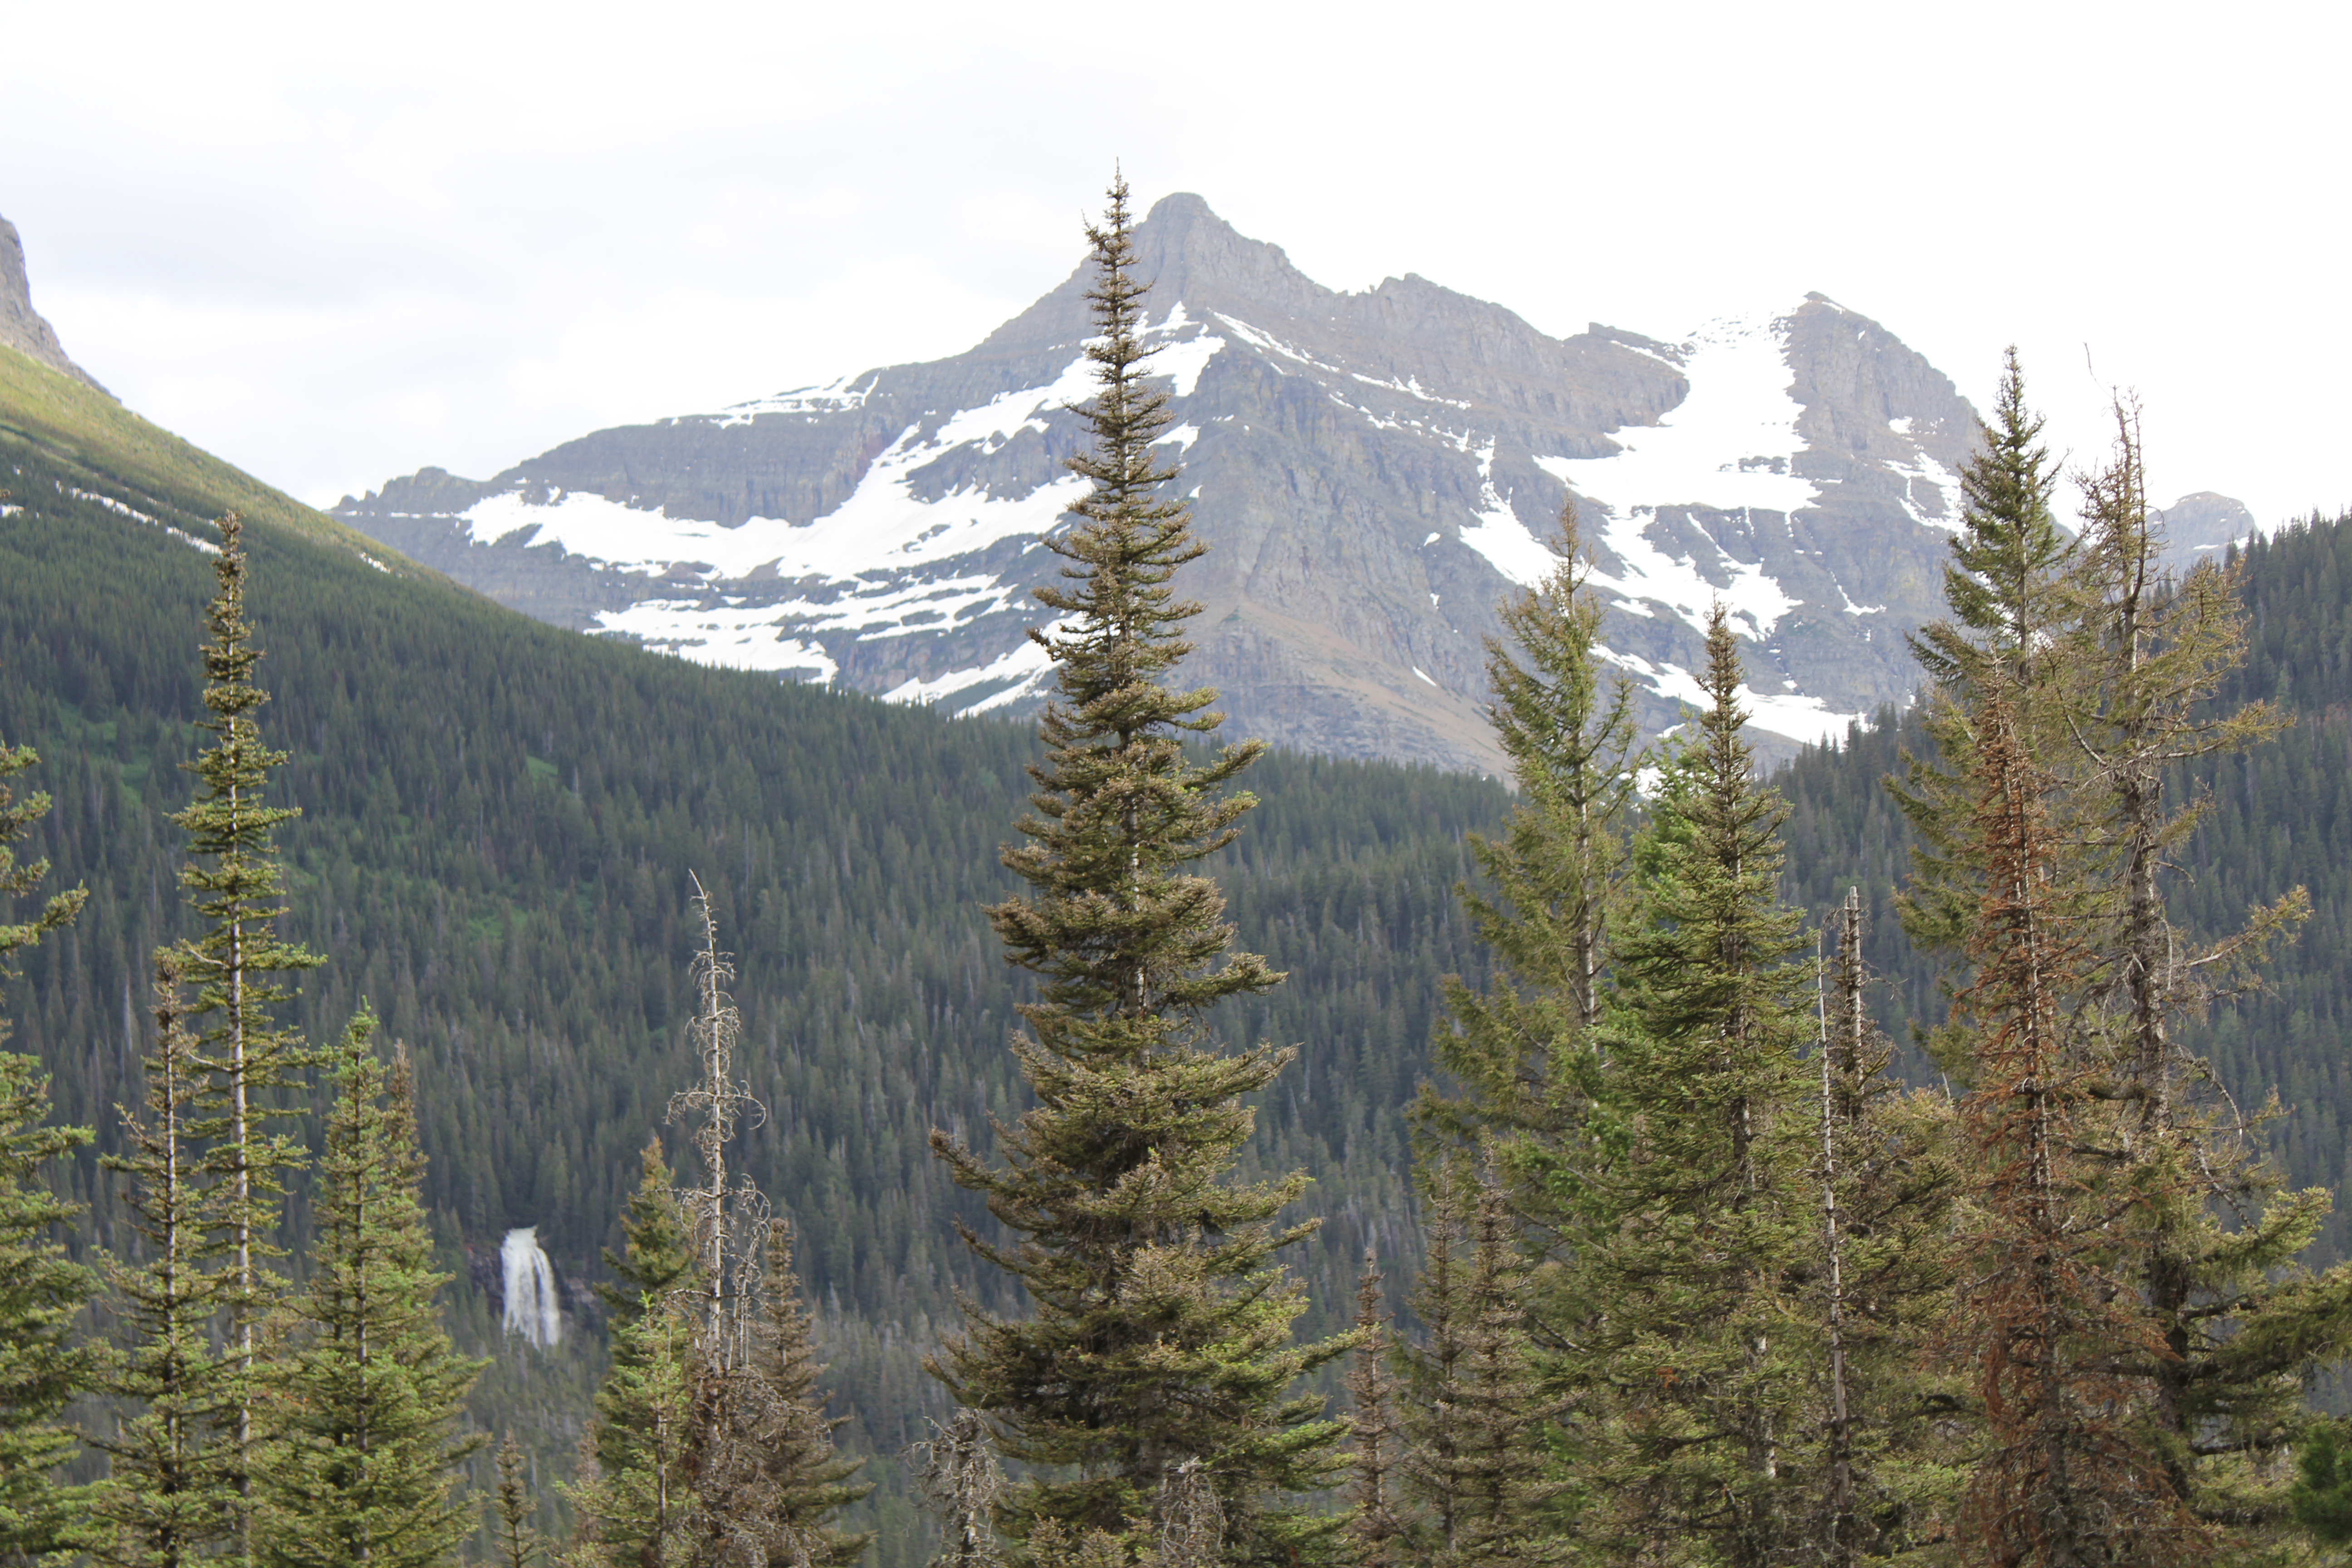 2011 July Break - Montana (Glacier National Park, Wild Horses, Swan Lake Camping Cabins, Stoney's Kwik Stop and 